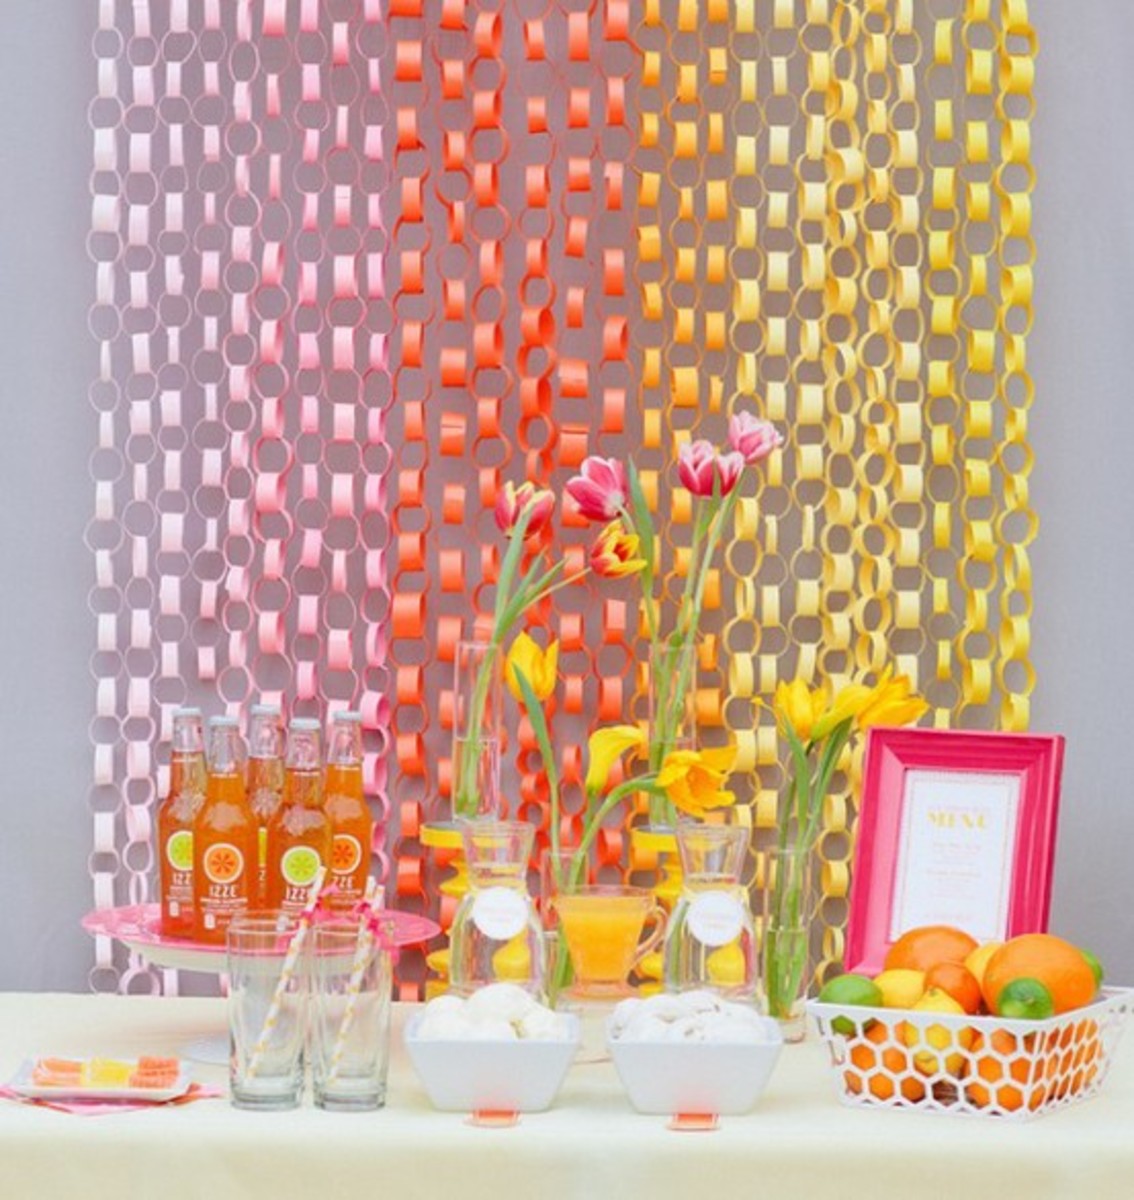 Party Décor on a Budget: 12 Beautiful DIY Paper Decorations - FeltMagnet